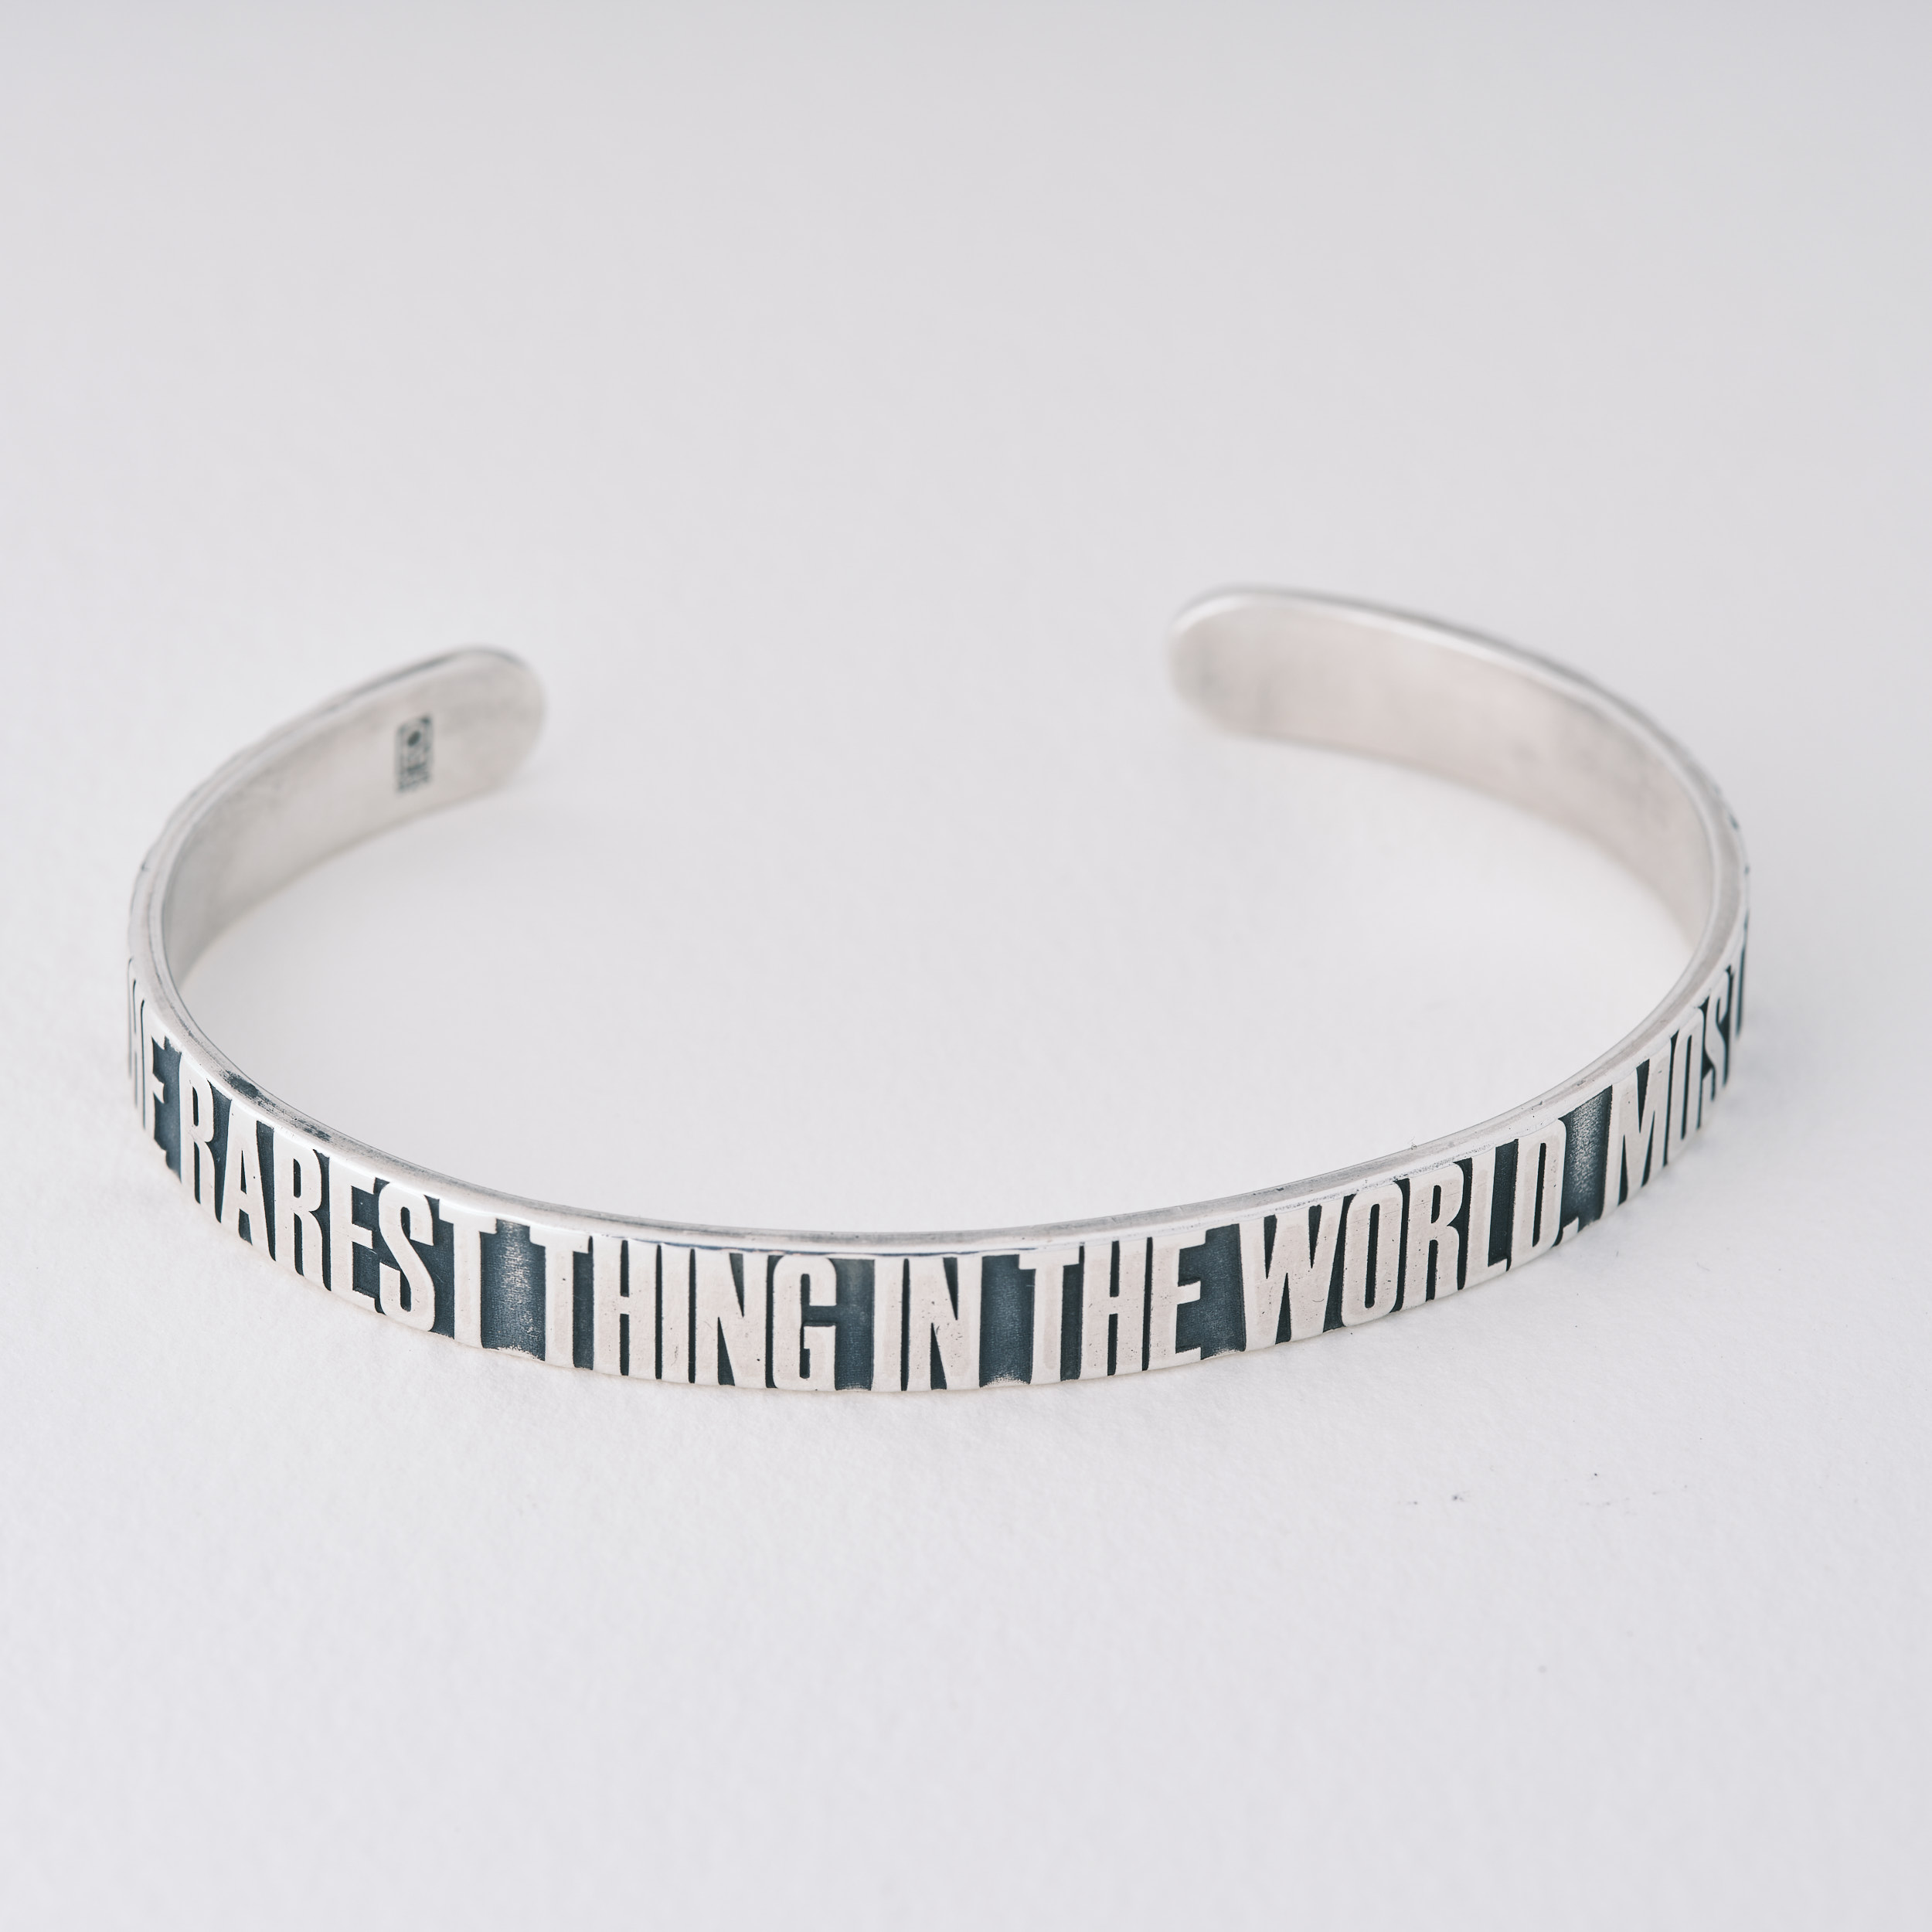 Personalized bracelet for men in sterling silver